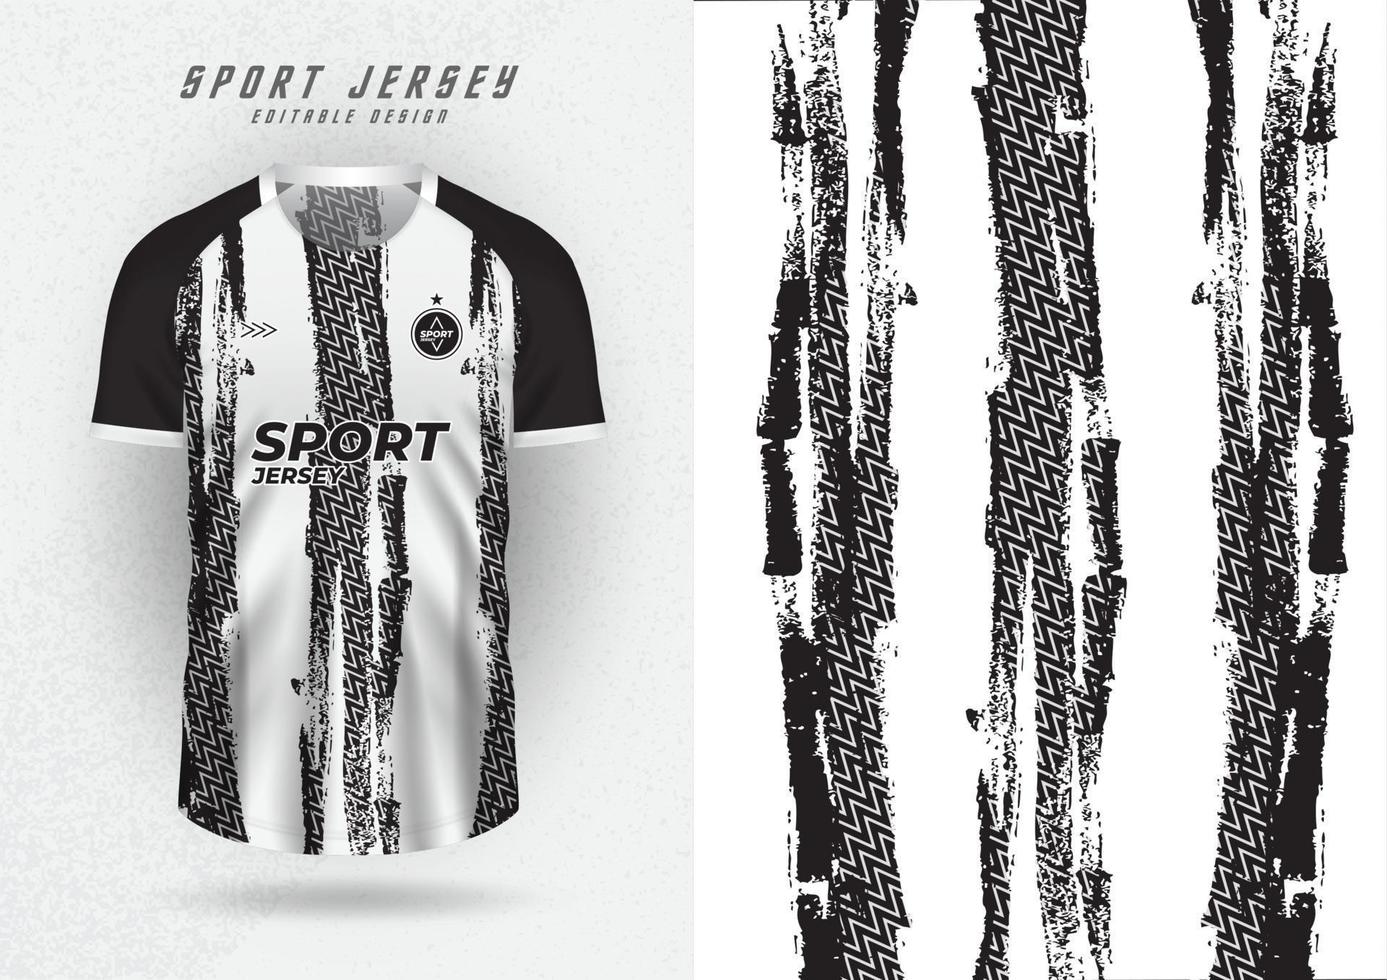 Background mockup for sports jerseys, jerseys, running jerseys, zebra prints. vector